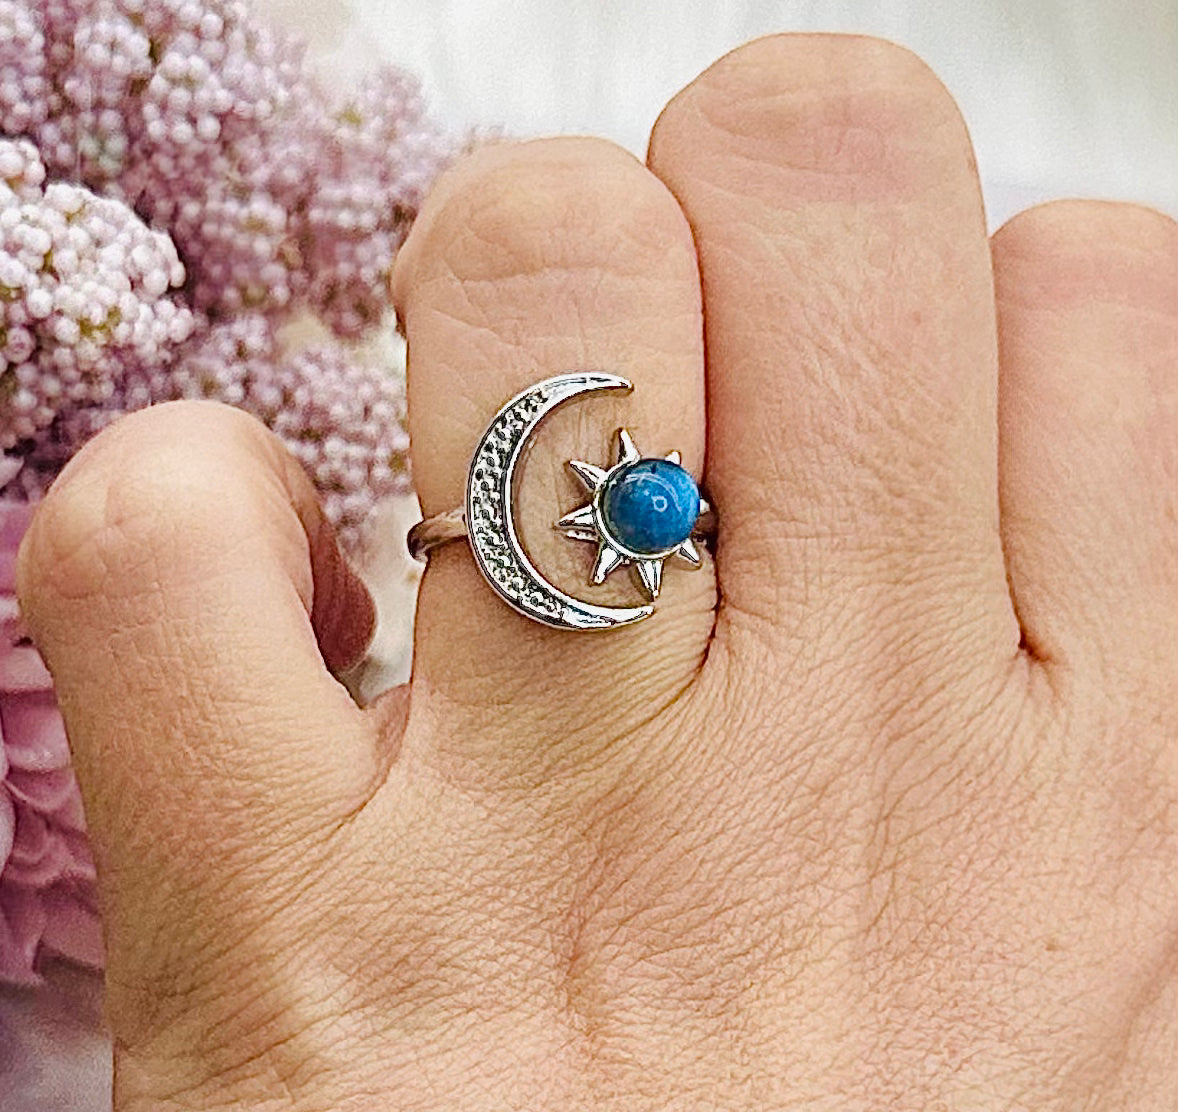 Stunning Blue Flash Labradorite Moon & Star Adjustable Ring In Gift Bag